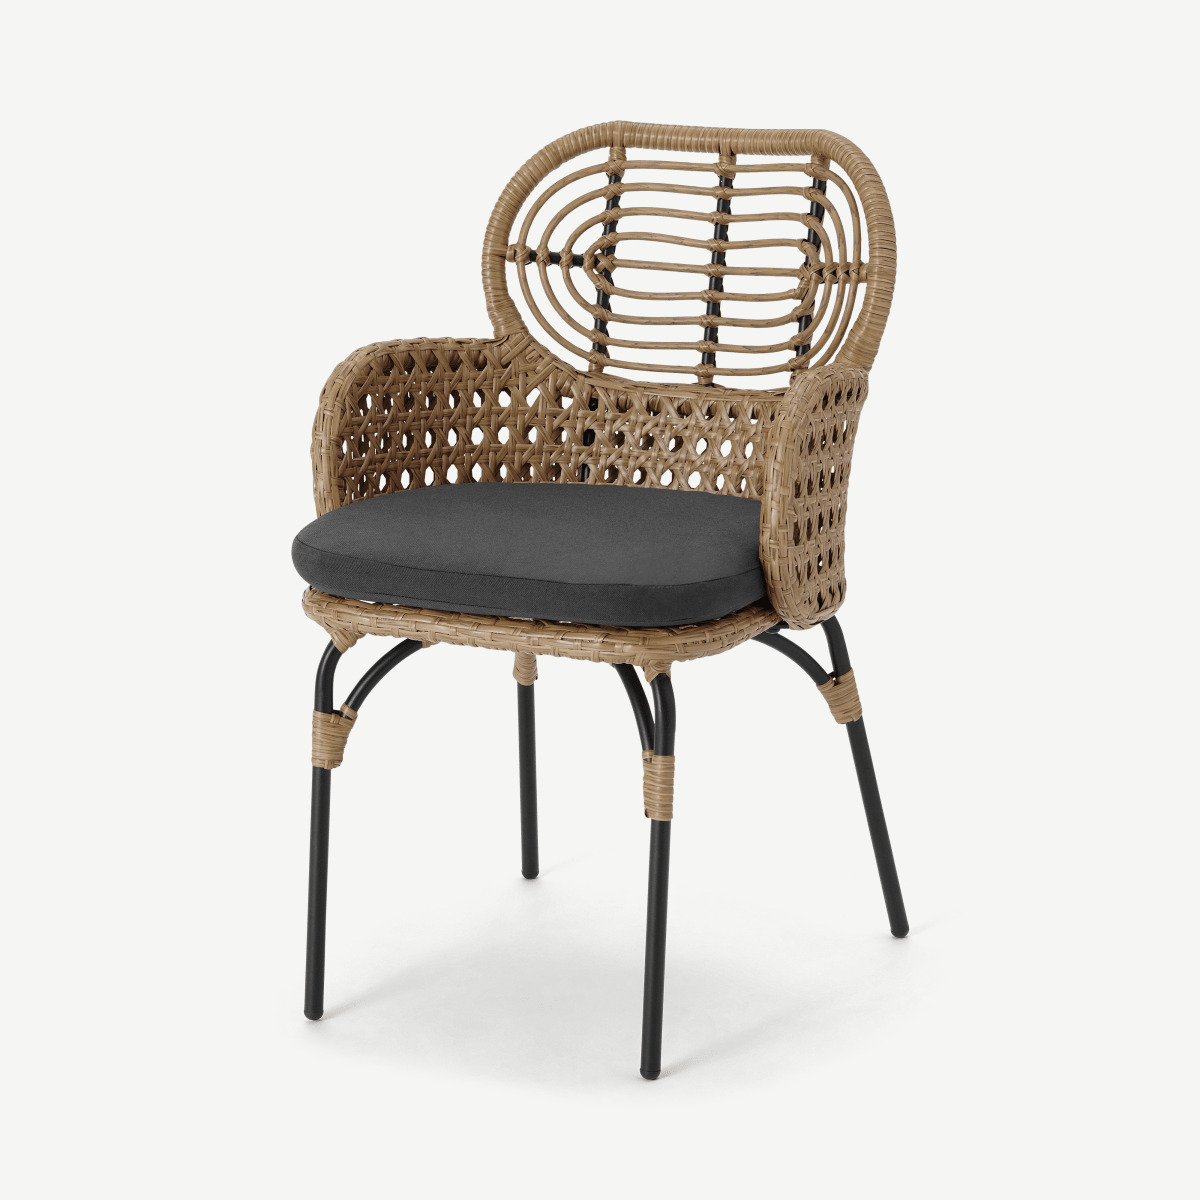 Swara Garden Carver Chair, Polyrattan, Natural and Black